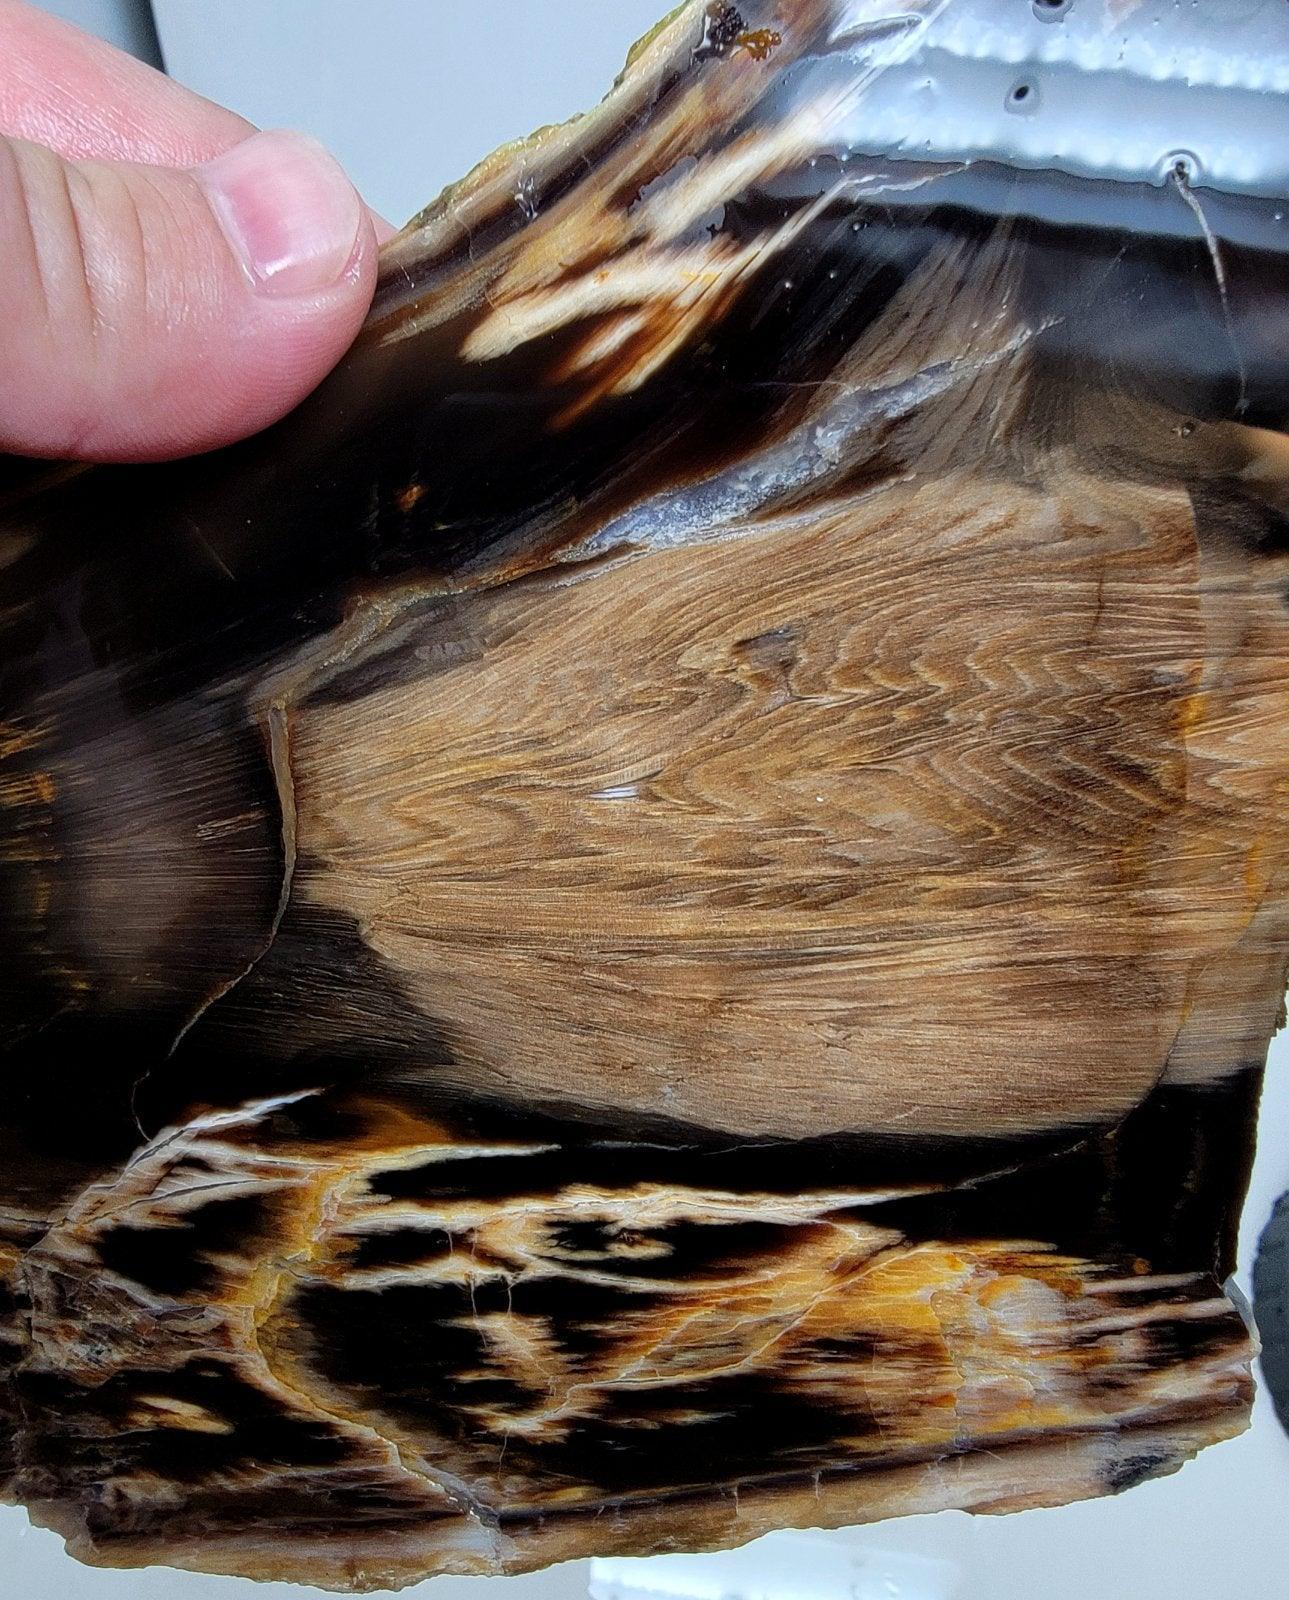 RARE Badger Pocket Petrified Wood Large Lapidary Slab! - LapidaryCentral